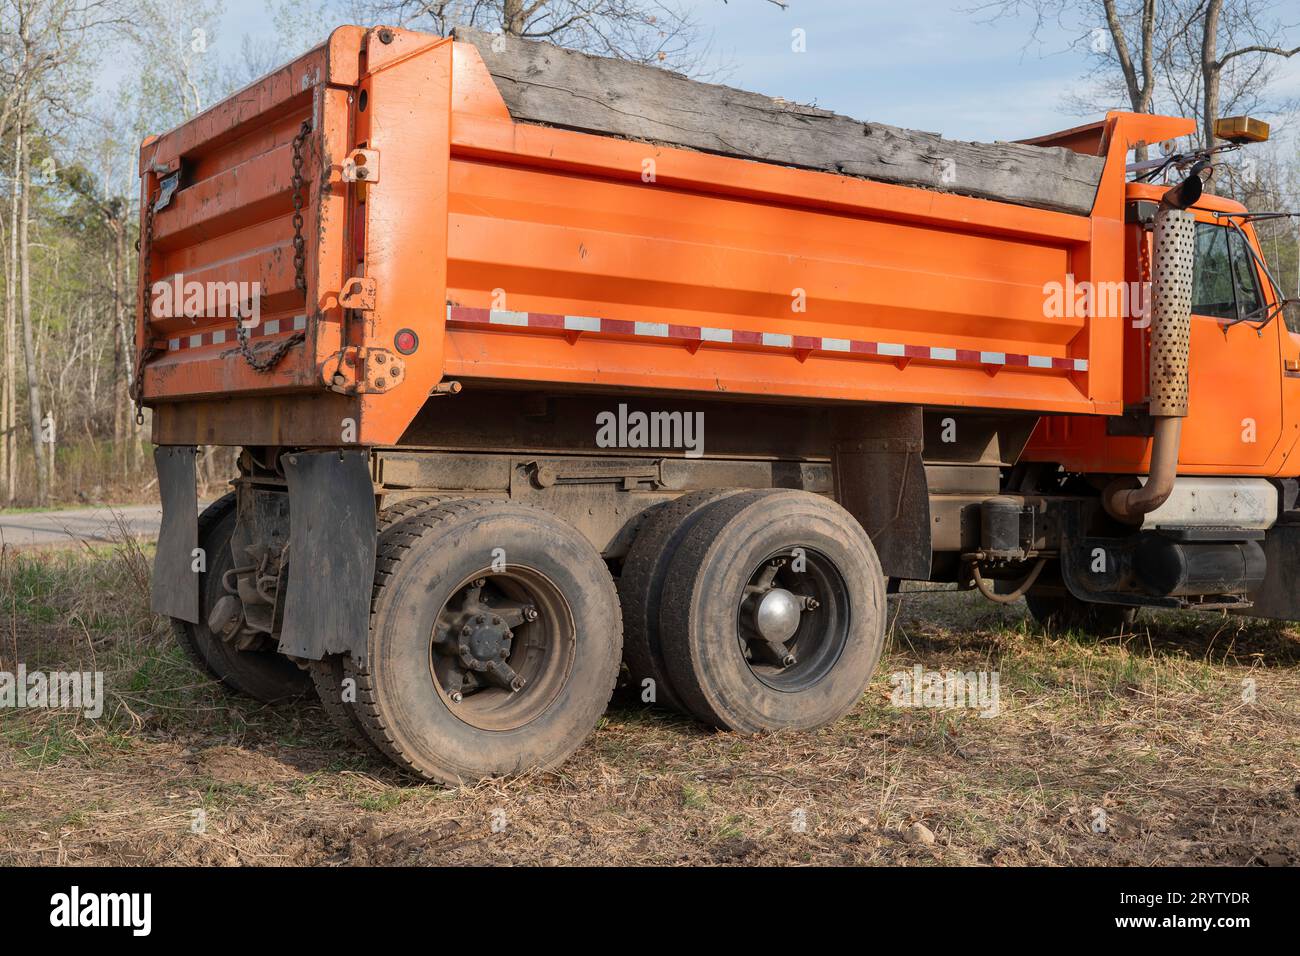 An older well-used orange gravel or dump truck box, from back corner view. Stock Photo